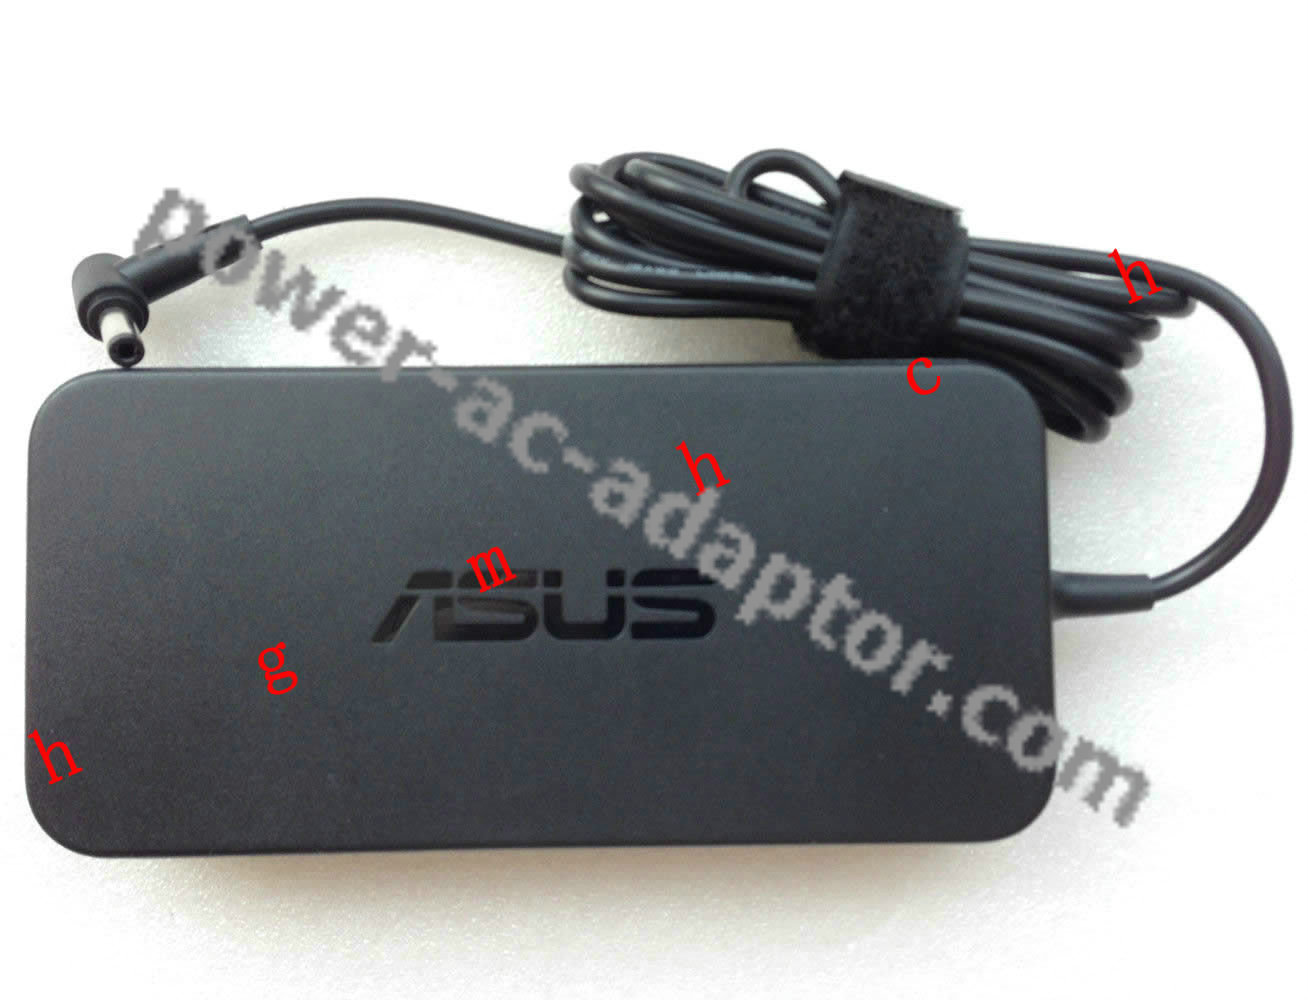 Genuine OEM Asus 120W Slim G60Vx P8800 Gaming AC Adapter for